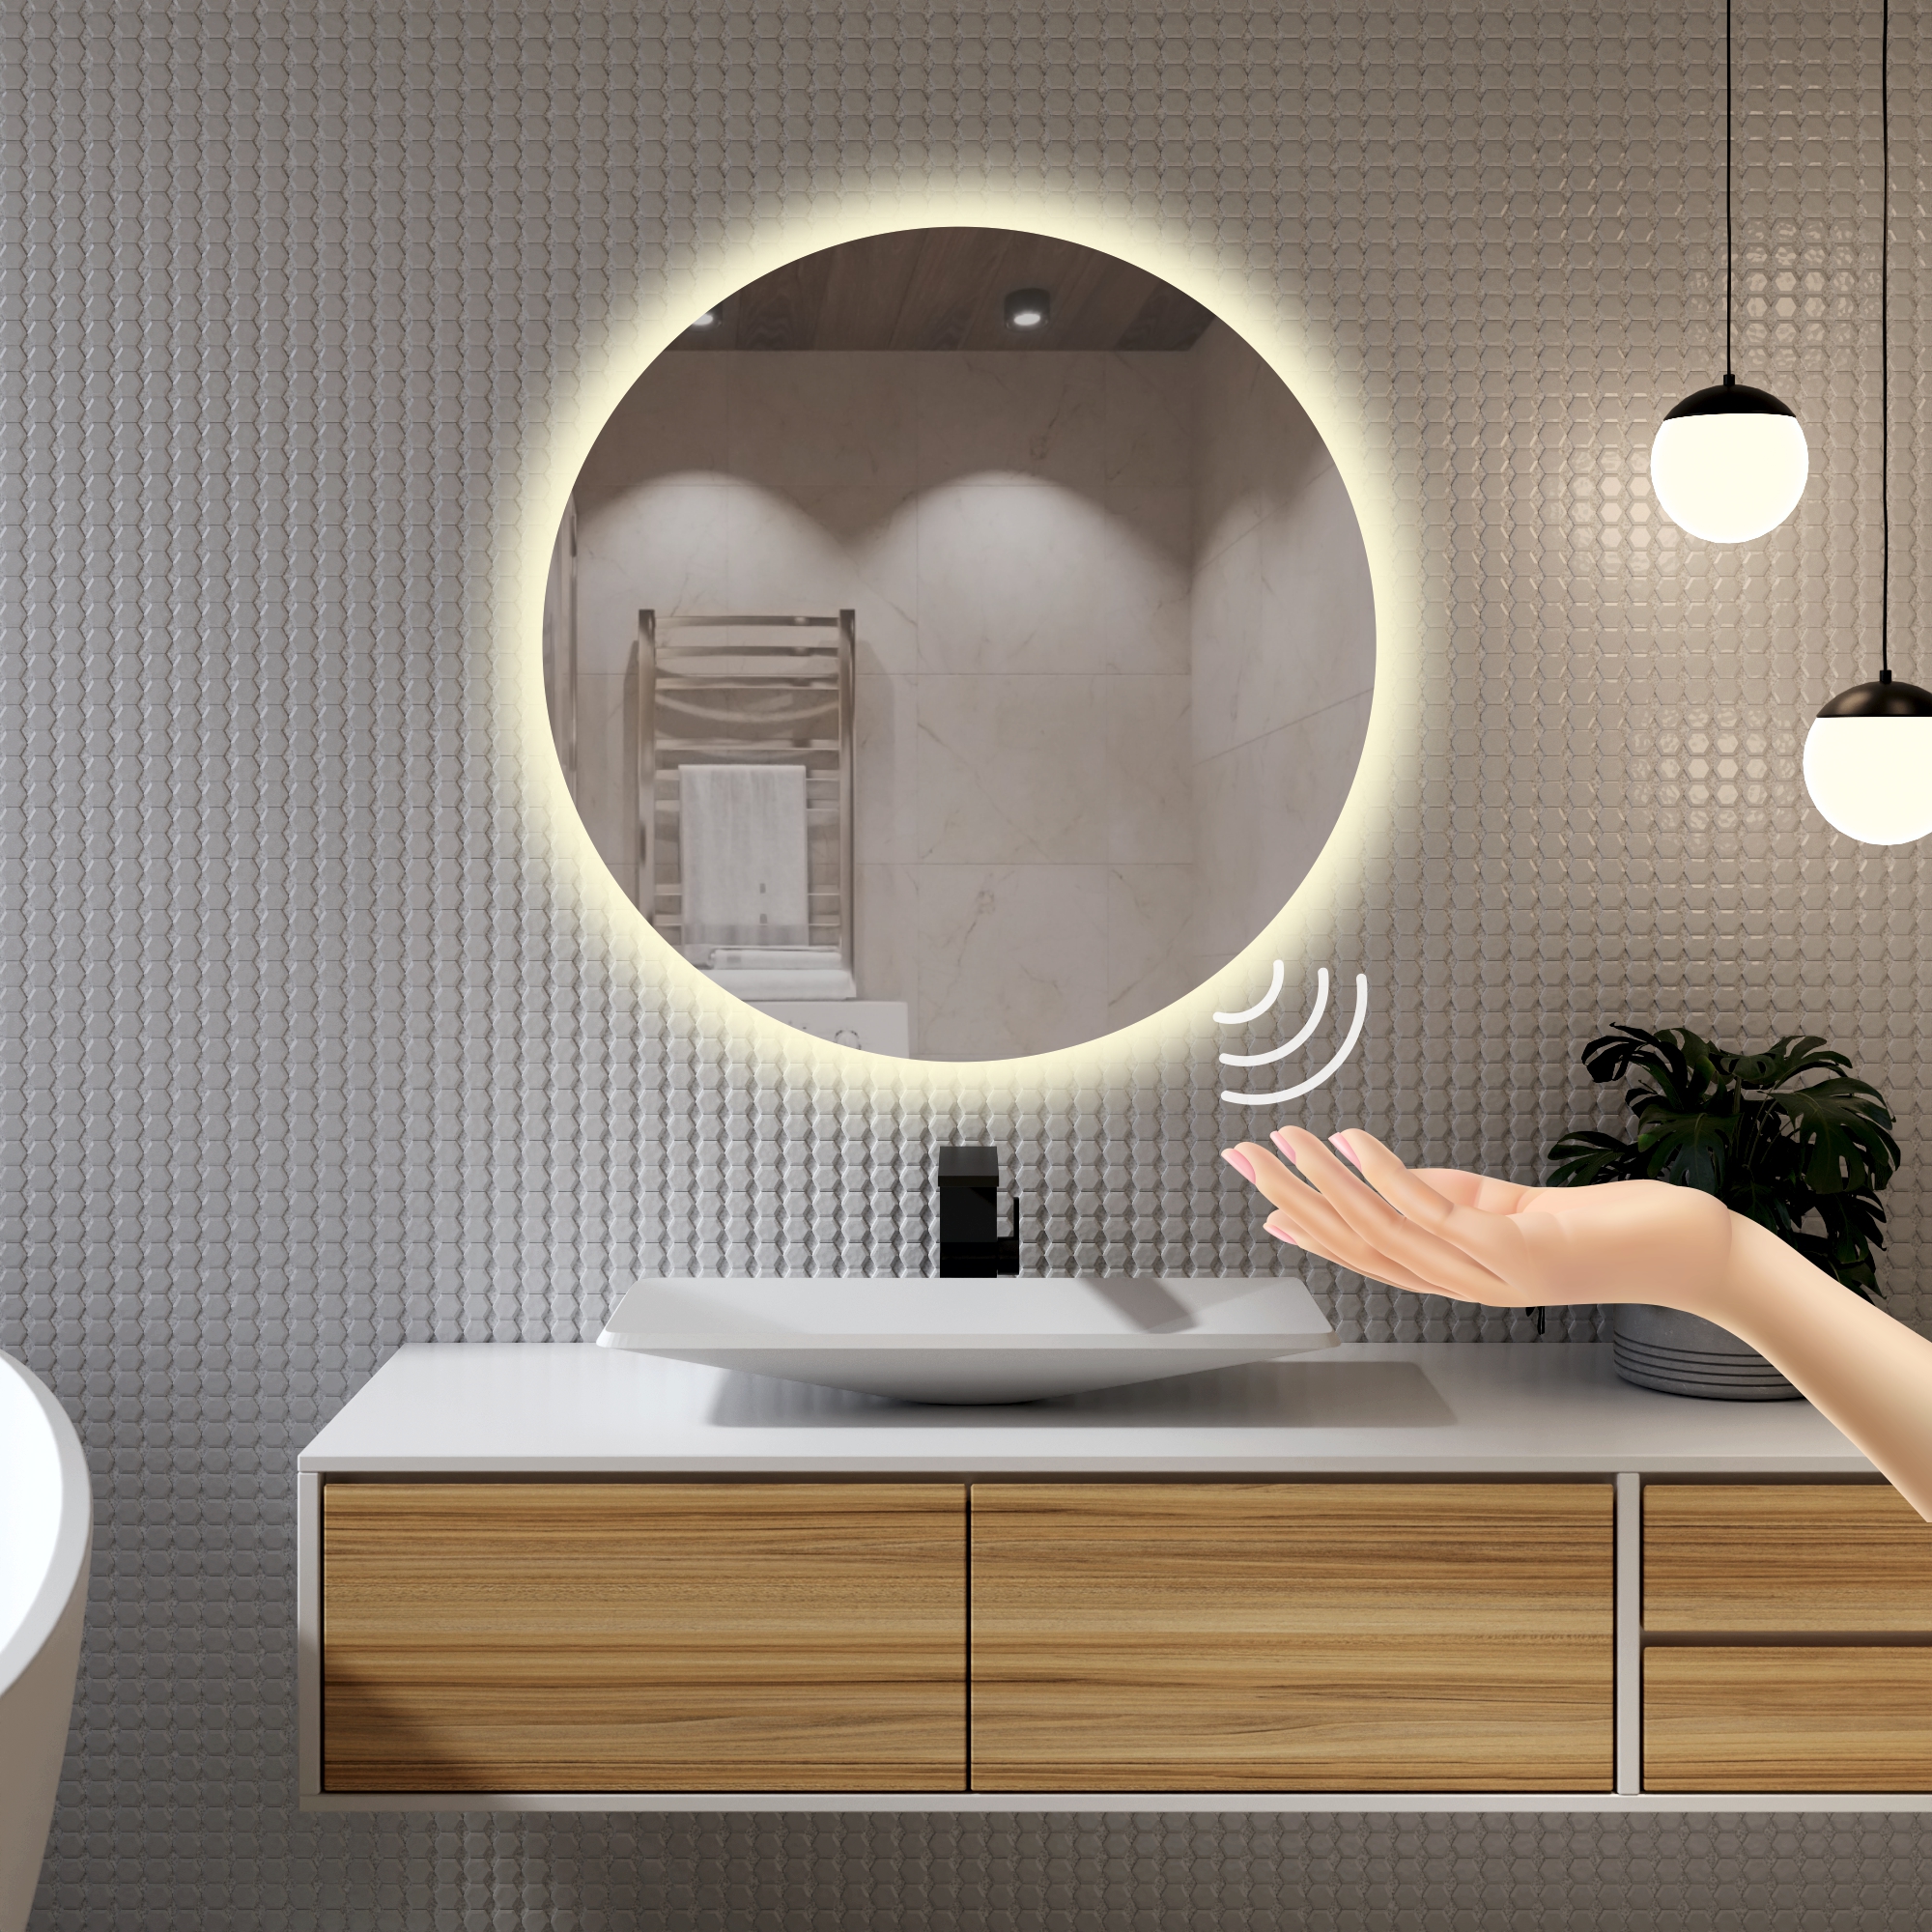 Зеркало для ванной Alfa Mirrors с дневной подсветкой 4200К круглое 70см, арт. Na-7Vzd зеркало для ванной alfa mirrors с дневной подсветкой 4200к круглое 60см арт na 6vzd